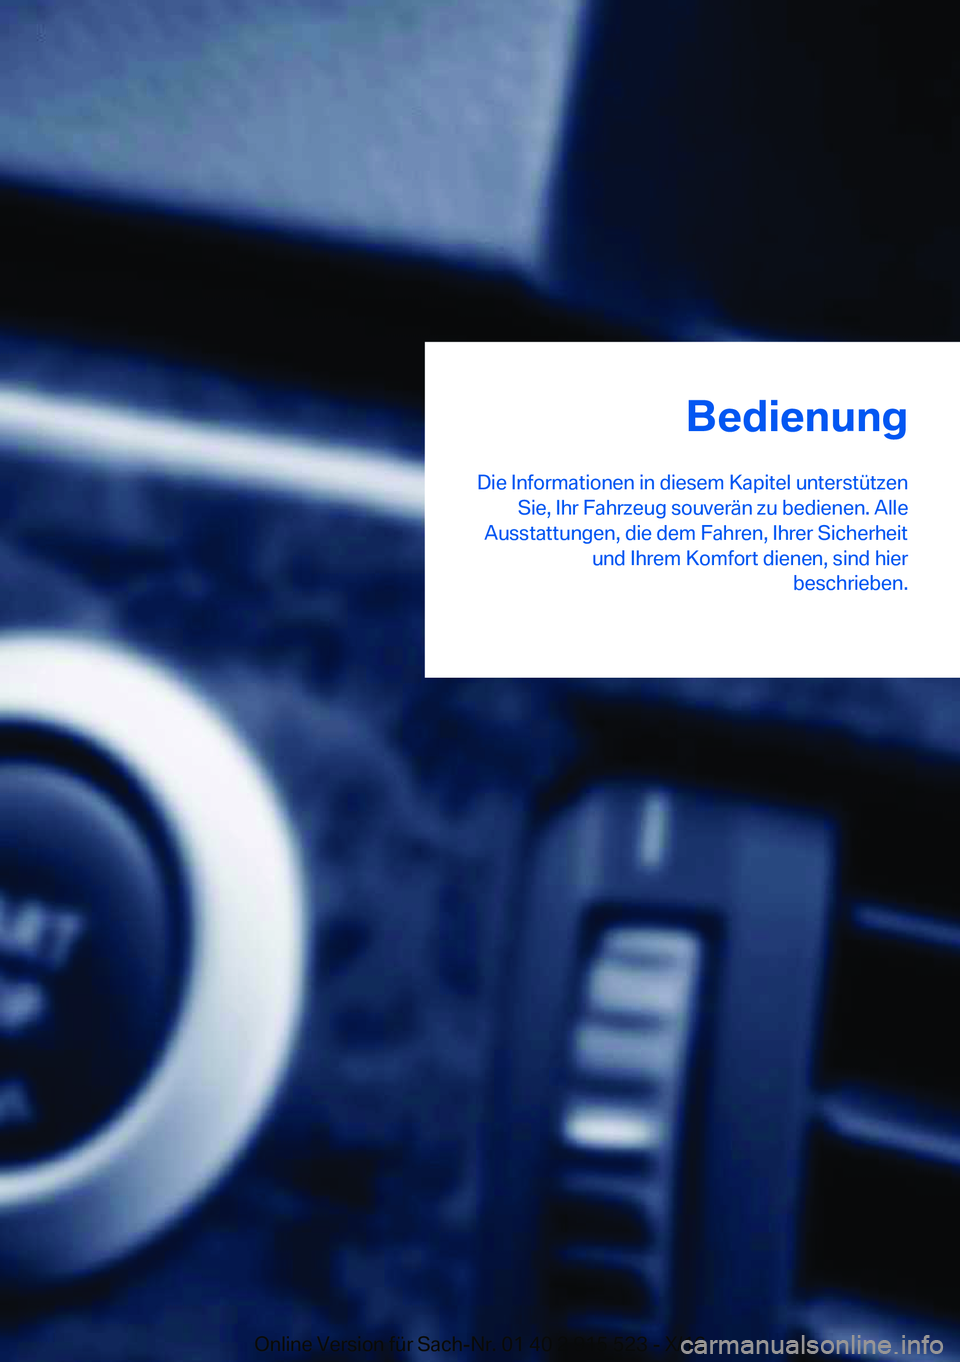 BMW X5 2017  Betriebsanleitungen (in German) �B�e�d�i�e�n�u�n�g
�D�i�e� �I�n�f�o�r�m�a�t�i�o�n�e�n� �i�n� �d�i�e�s�e�m� �K�a�p�i�t�e�l� �u�n�t�e�r�s�t�ü�t�z�e�n �S�i�e�,� �I�h�r� �F�a�h�r�z�e�u�g� �s�o�u�v�e�r�ä�n� �z�u� �b�e�d�i�e�n�e�n�.� �A